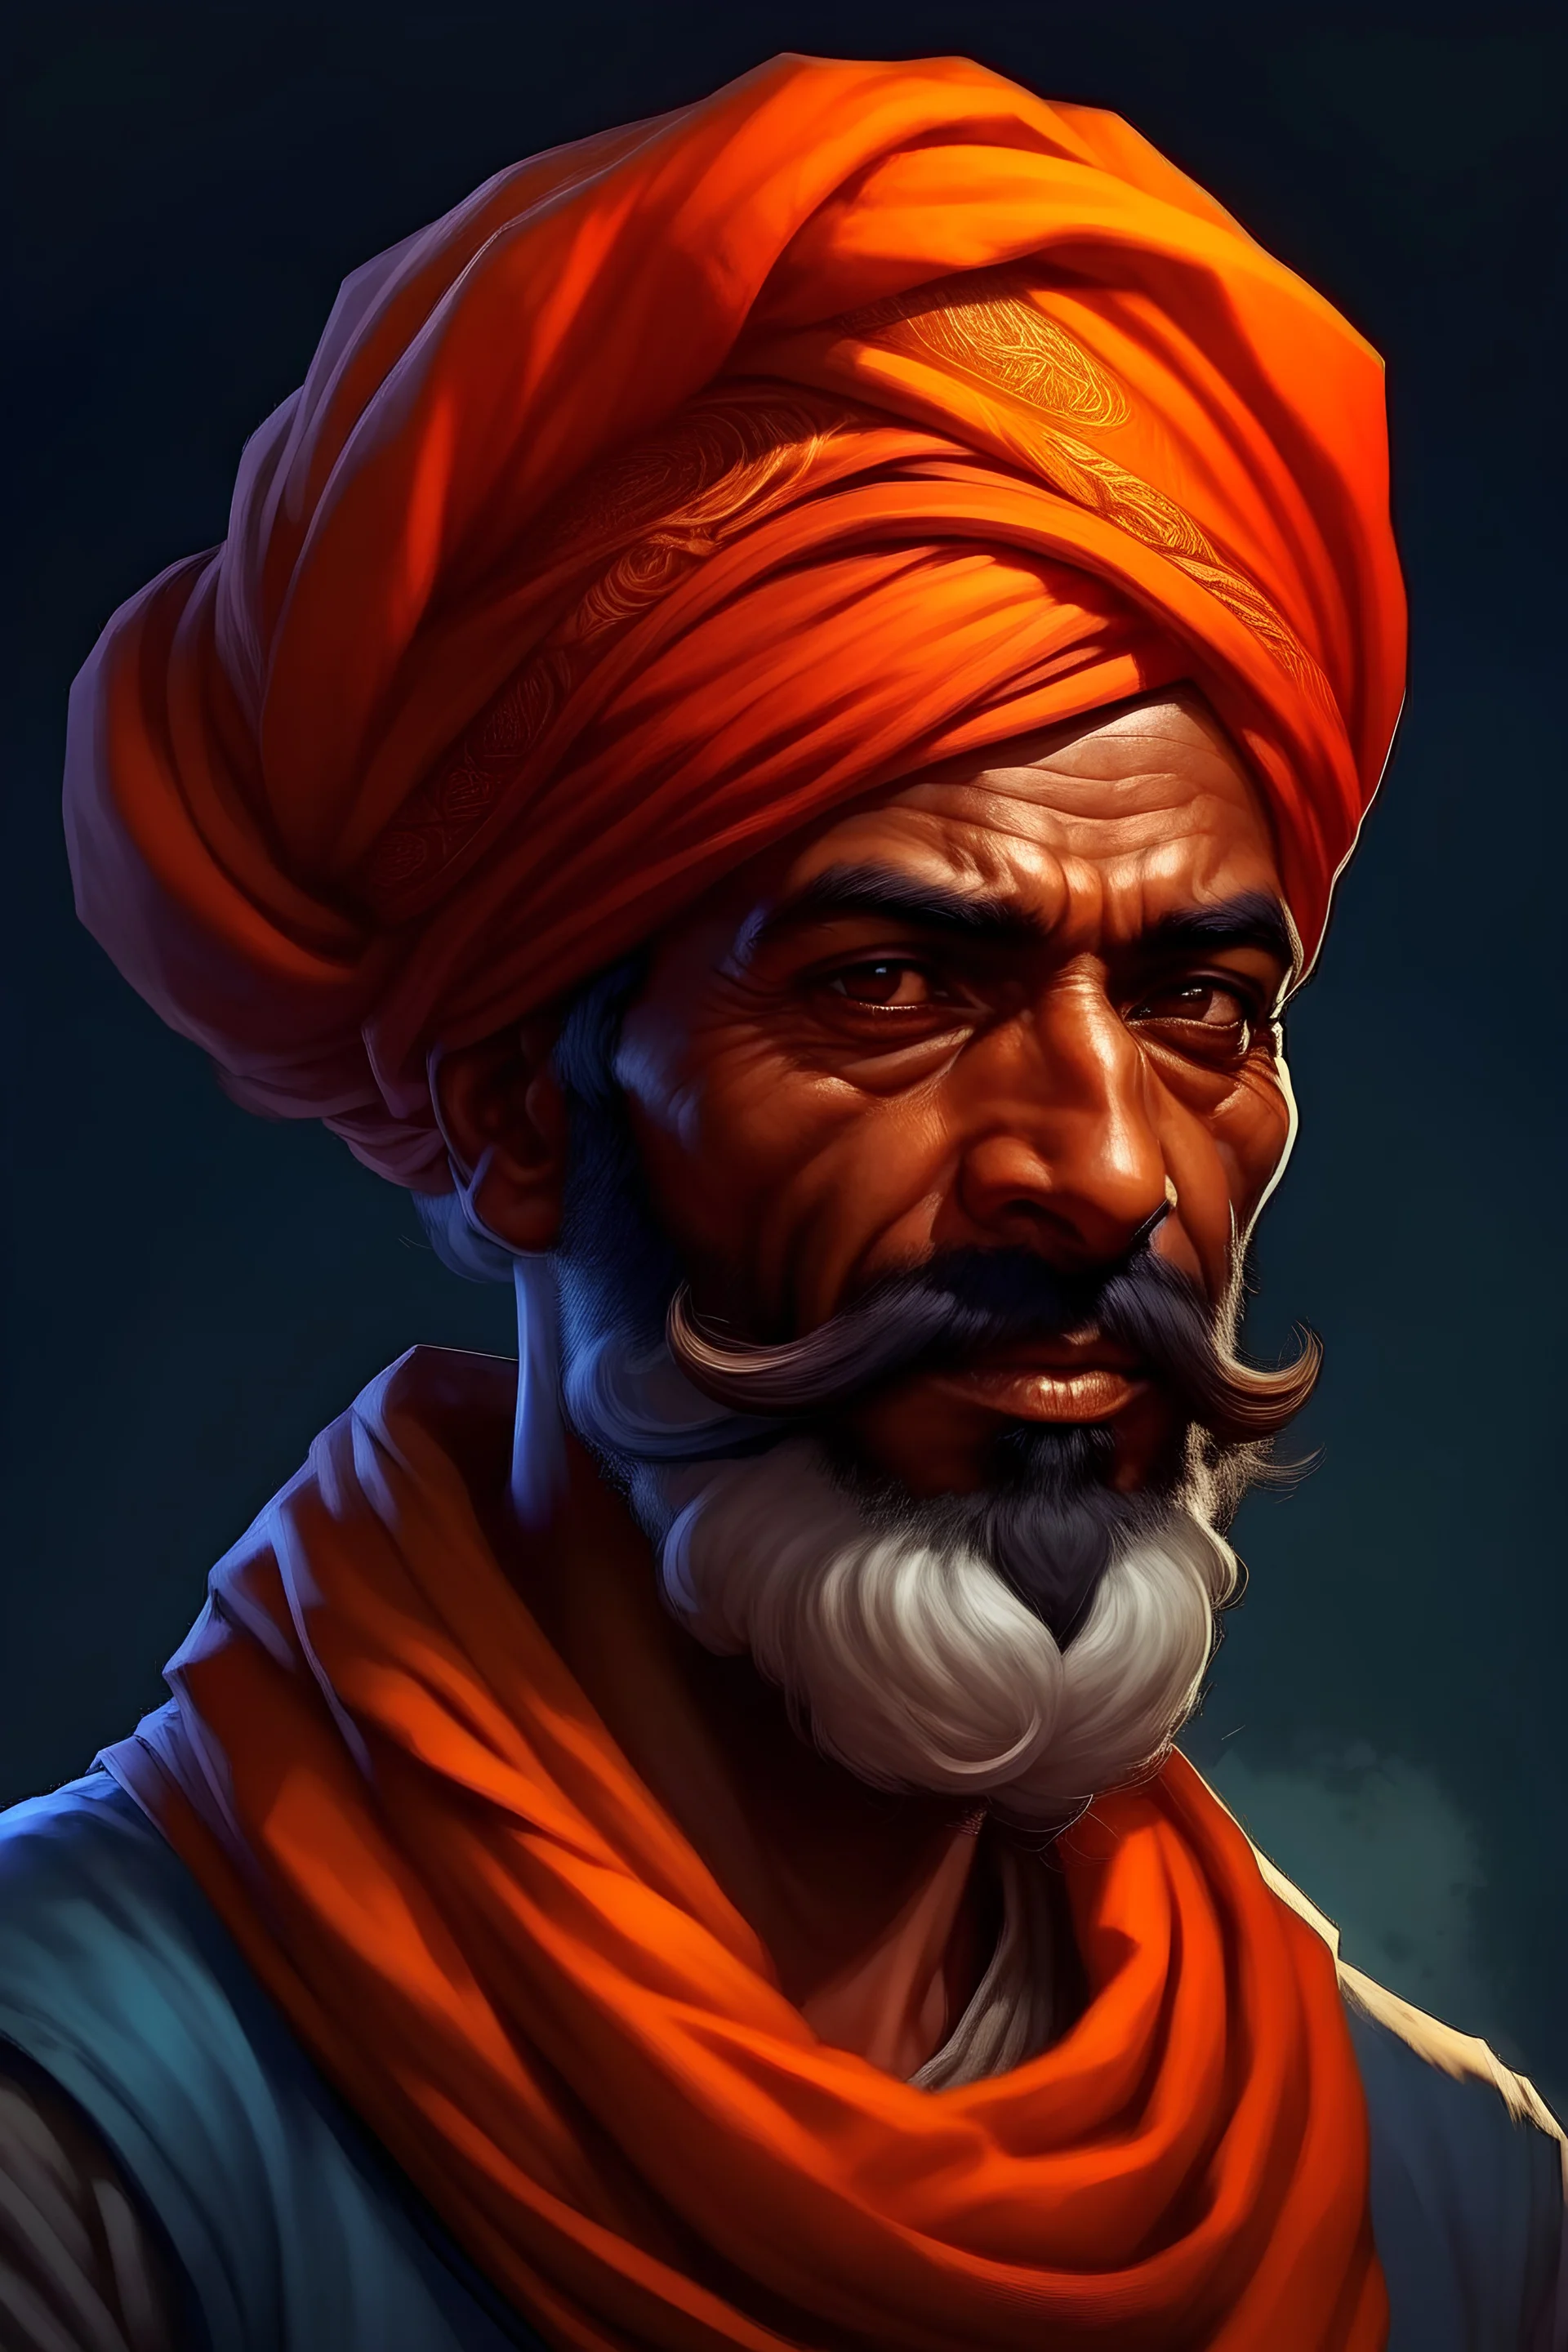 starwars character with turban